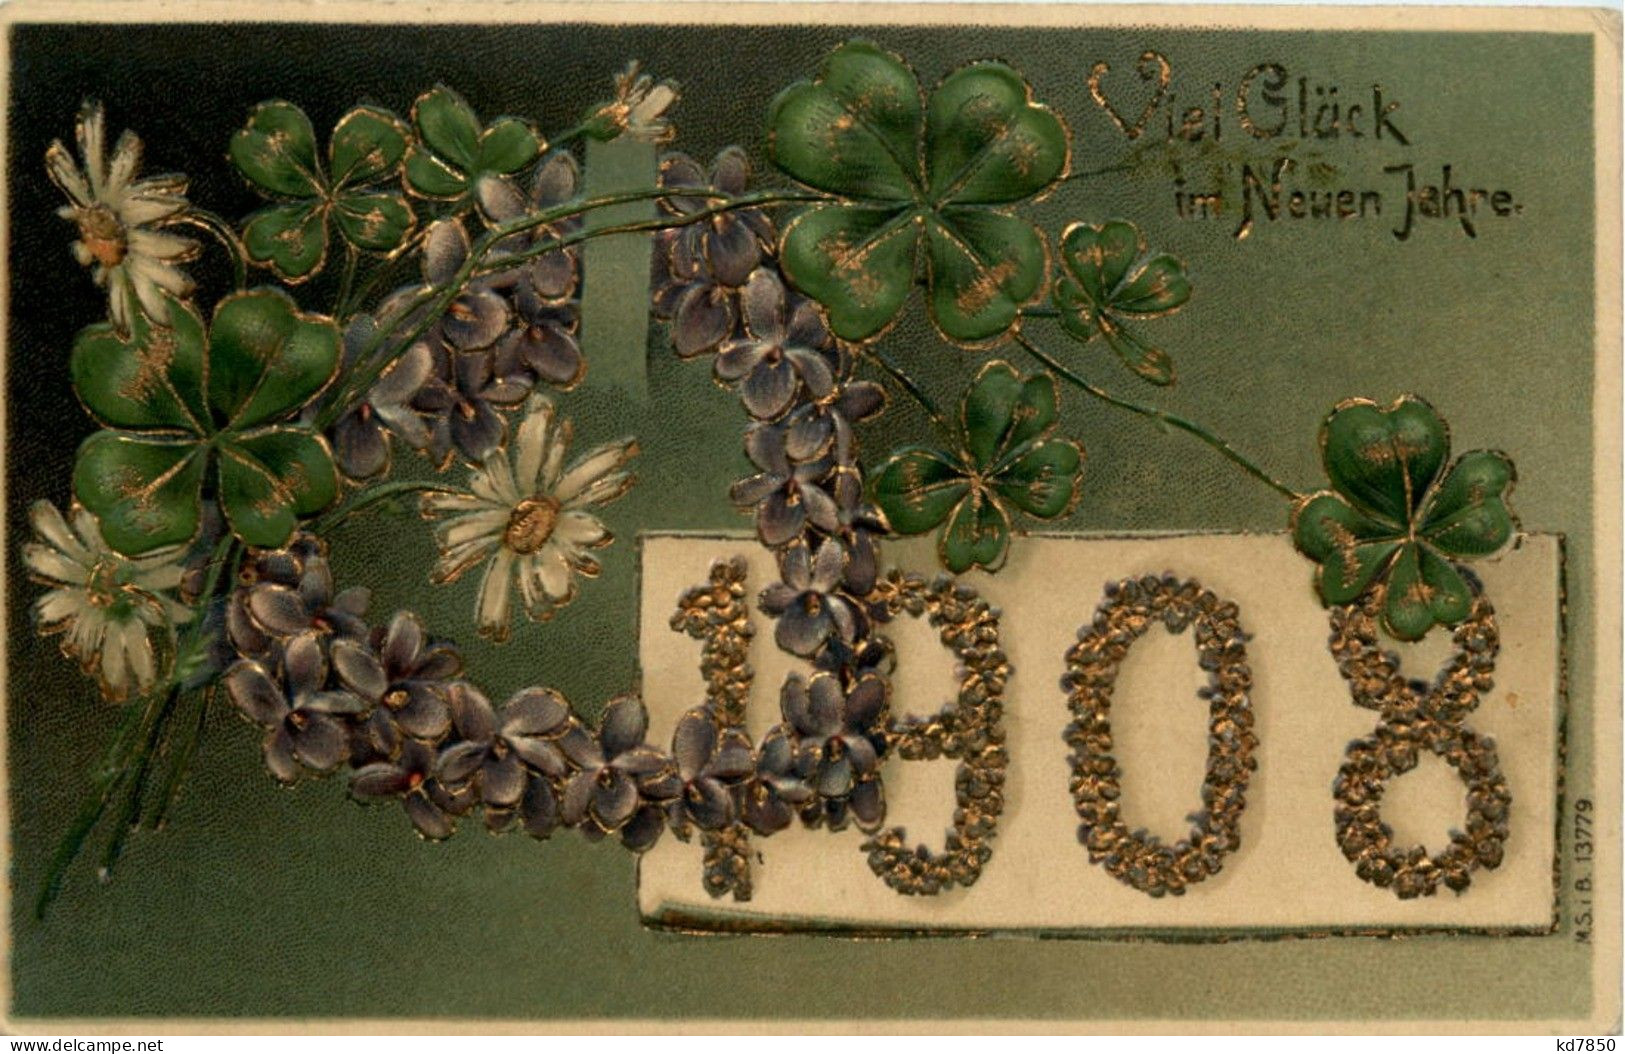 1908 - New Year